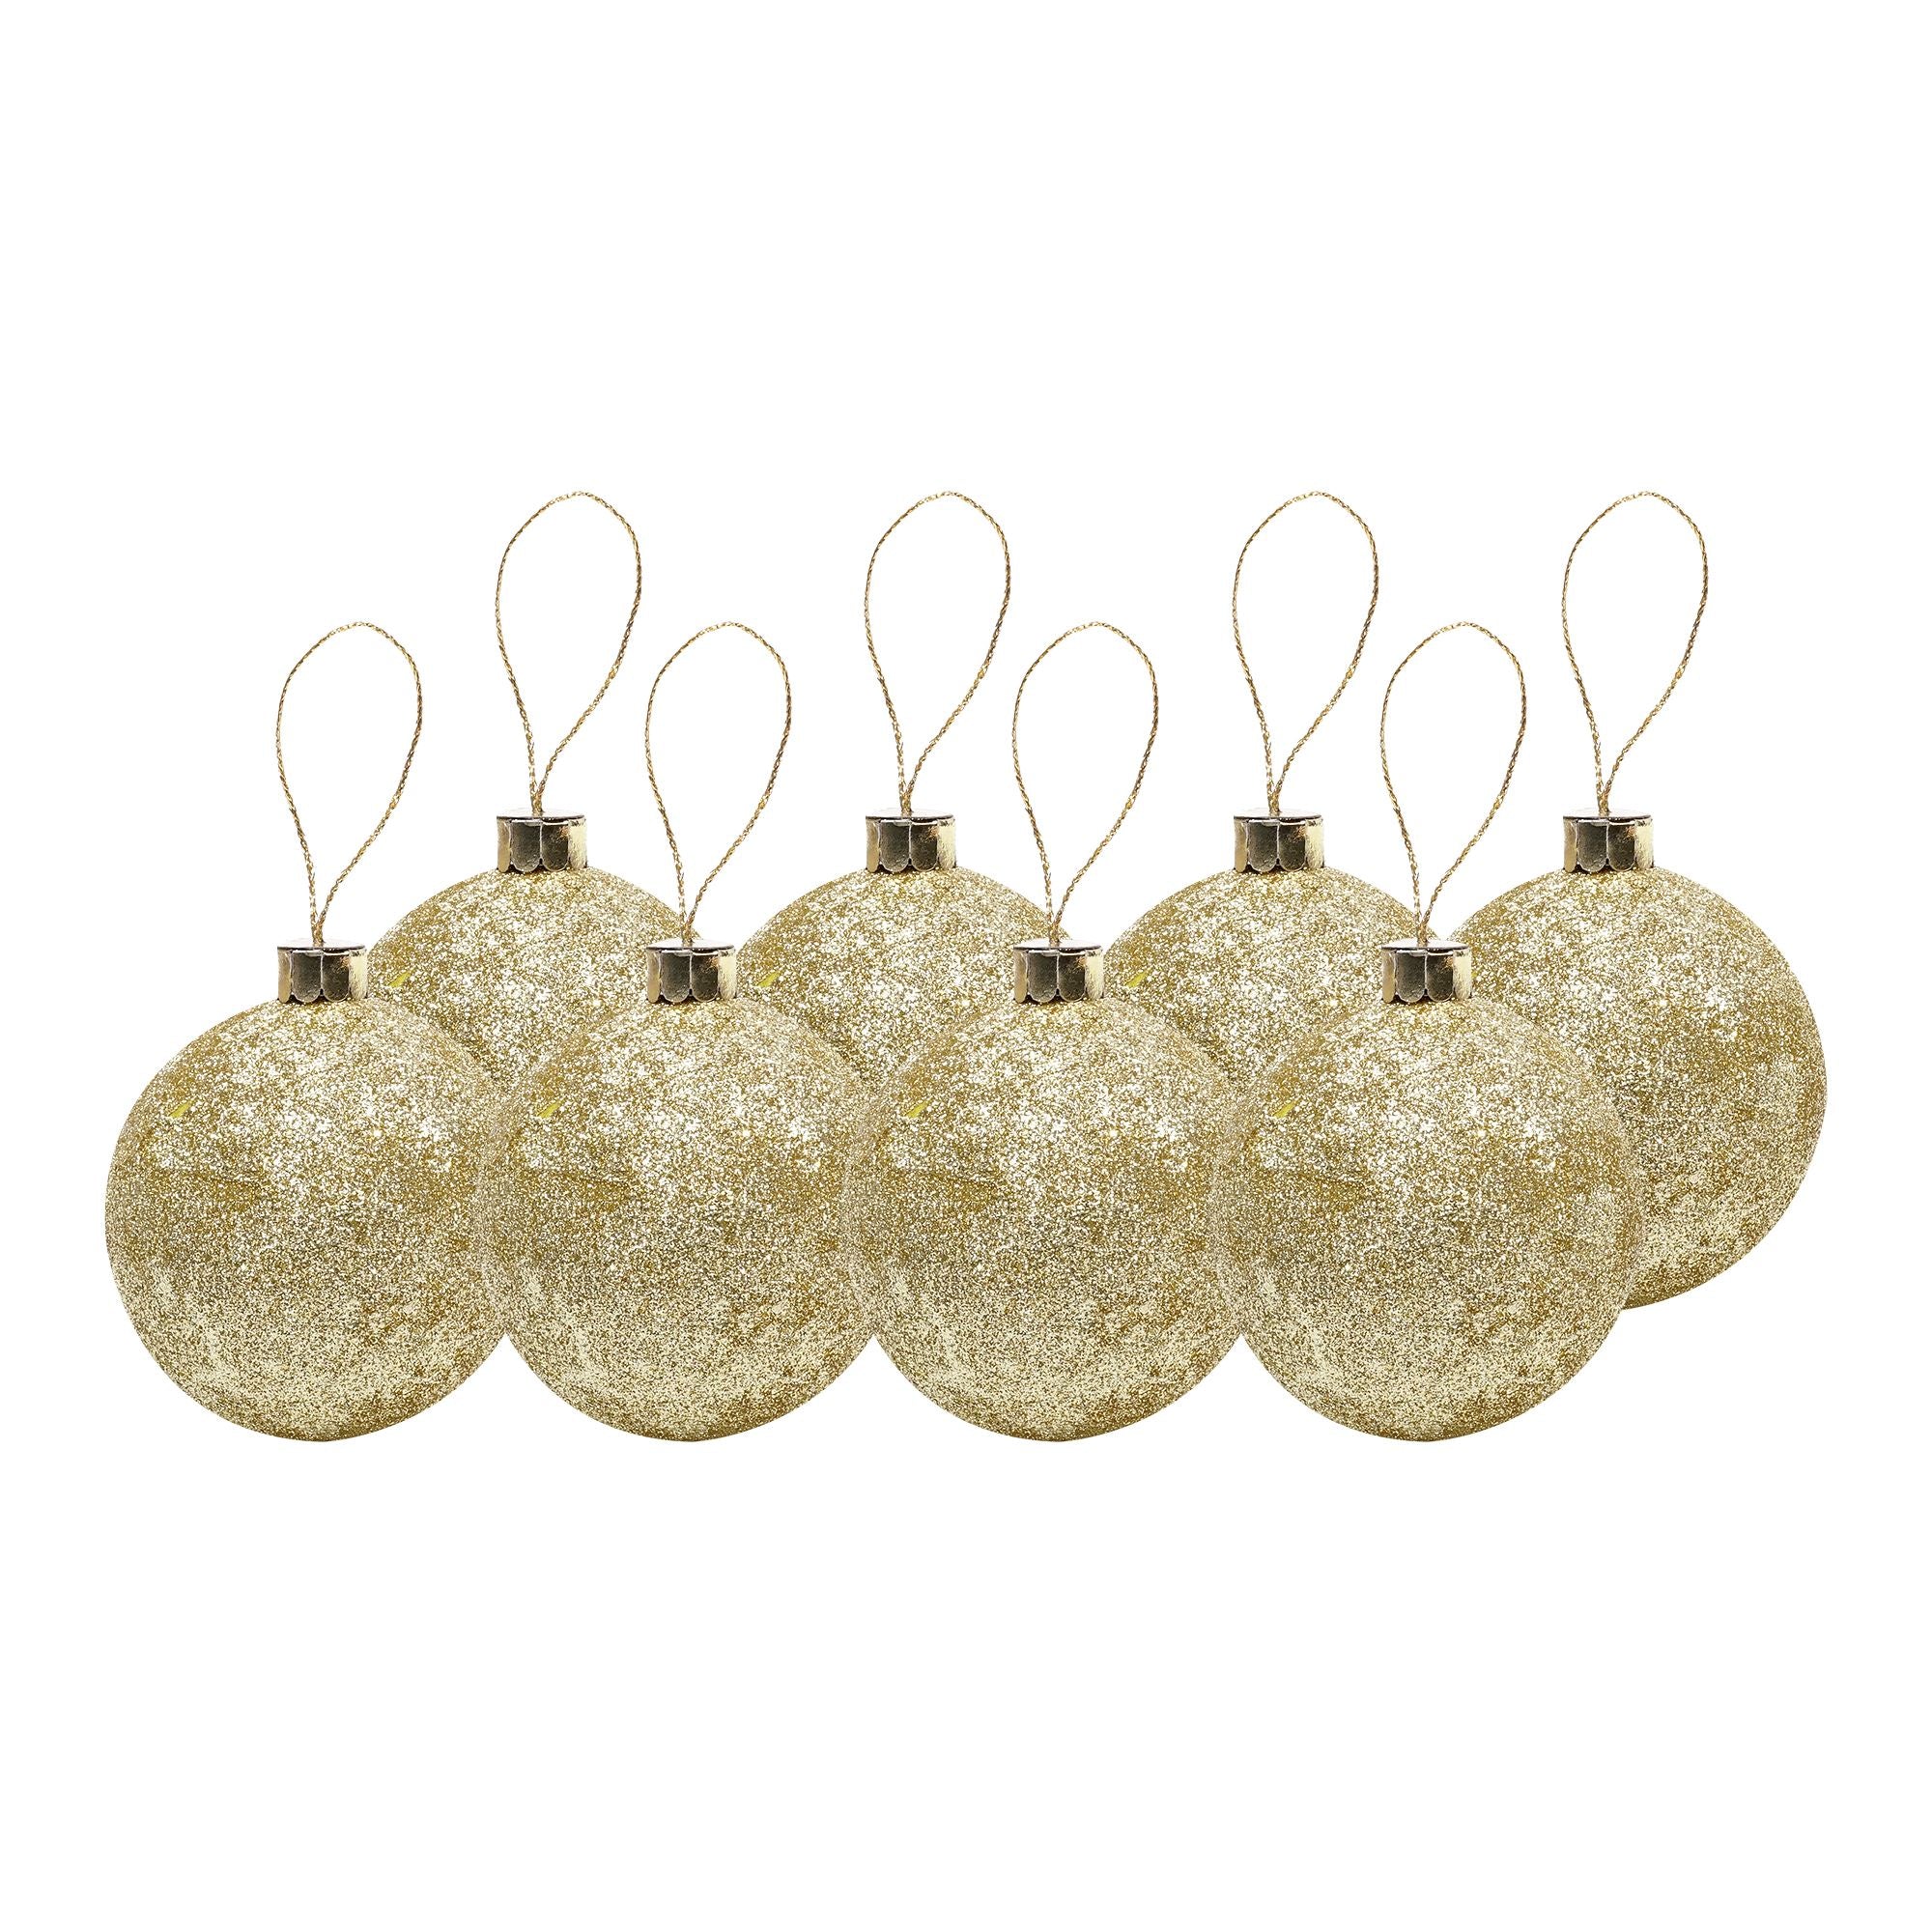 Handmade Christmas Ornaments - Glitter Baubles, 50mm, Gold, 8pc